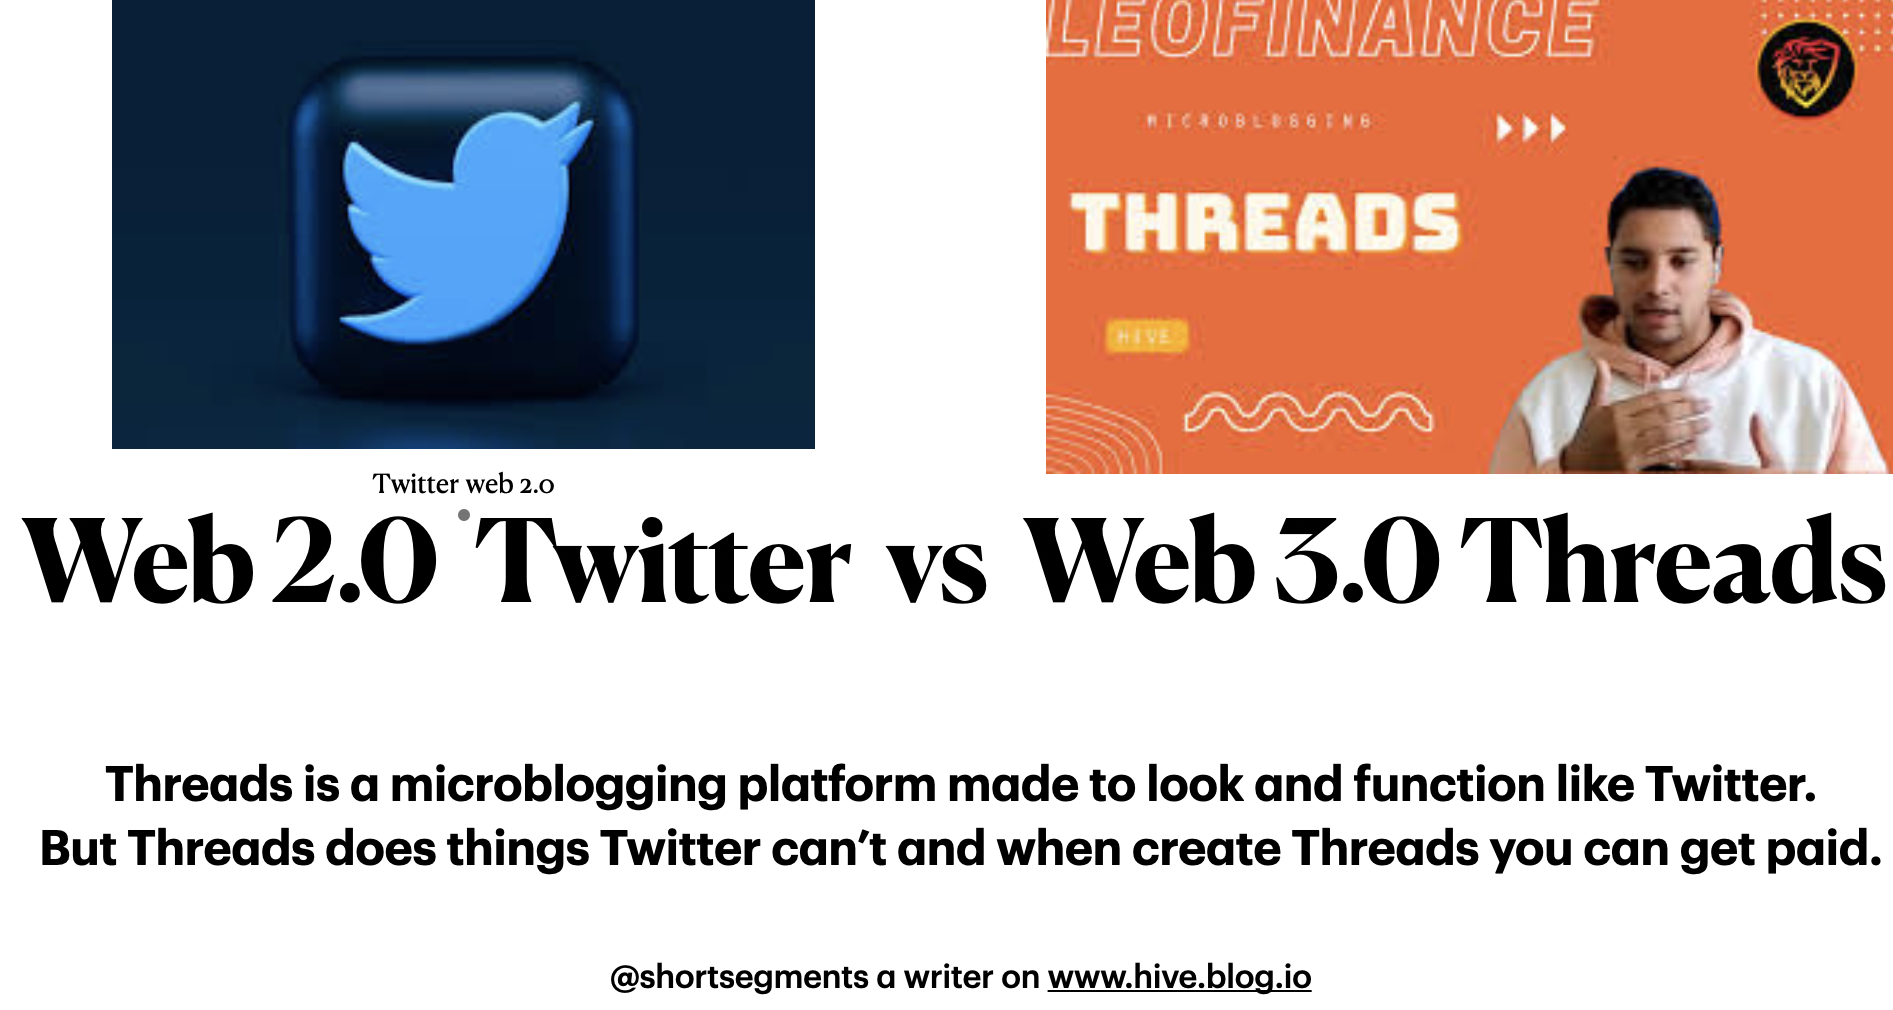 @shortsegments/comparing-web-2-0-twitter-tweets-to-web-3-0-leofinance-threads